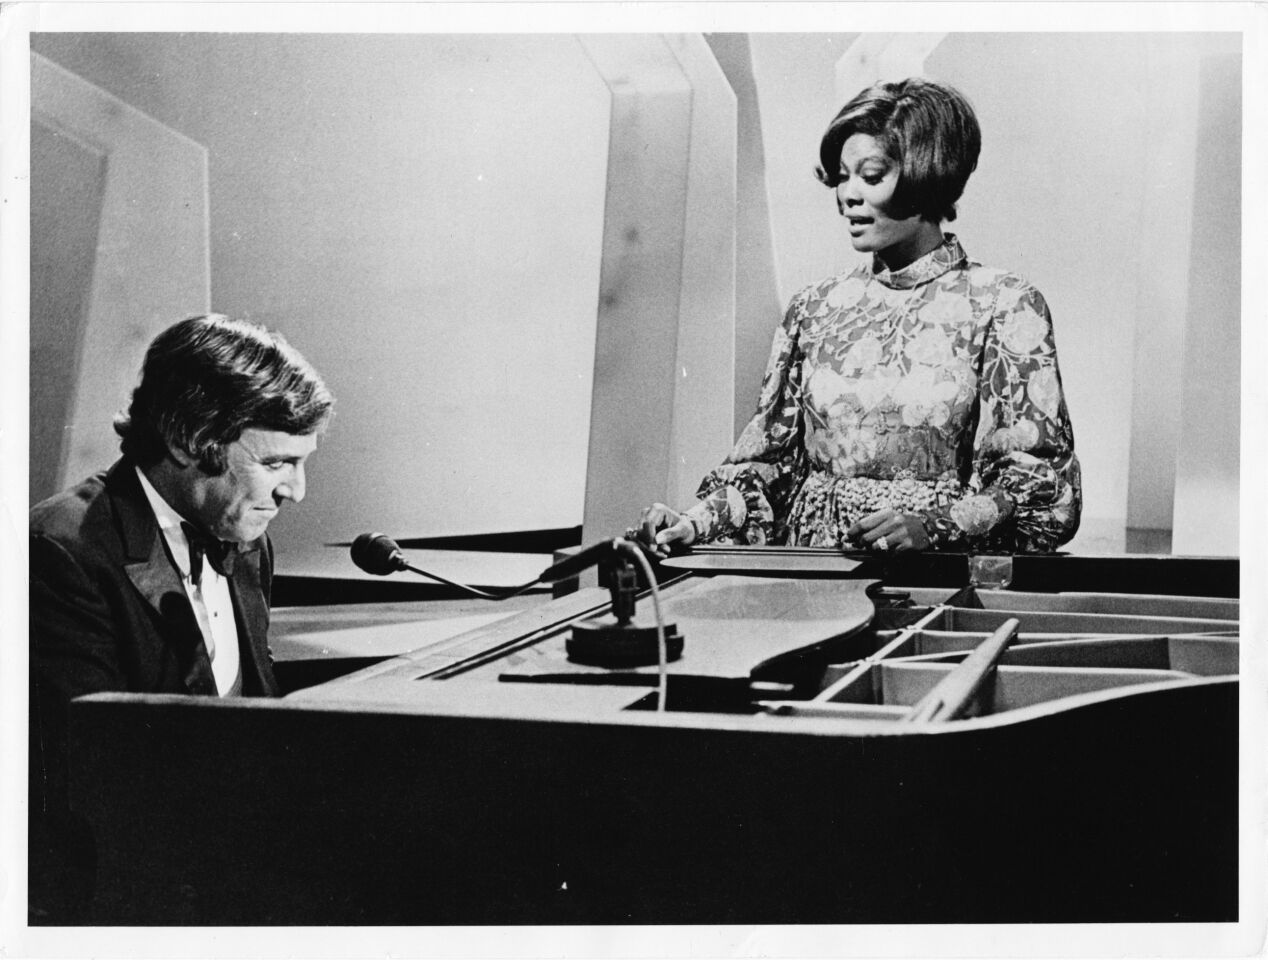 Burt Bacharach plays piano as Dionne Warwick sings